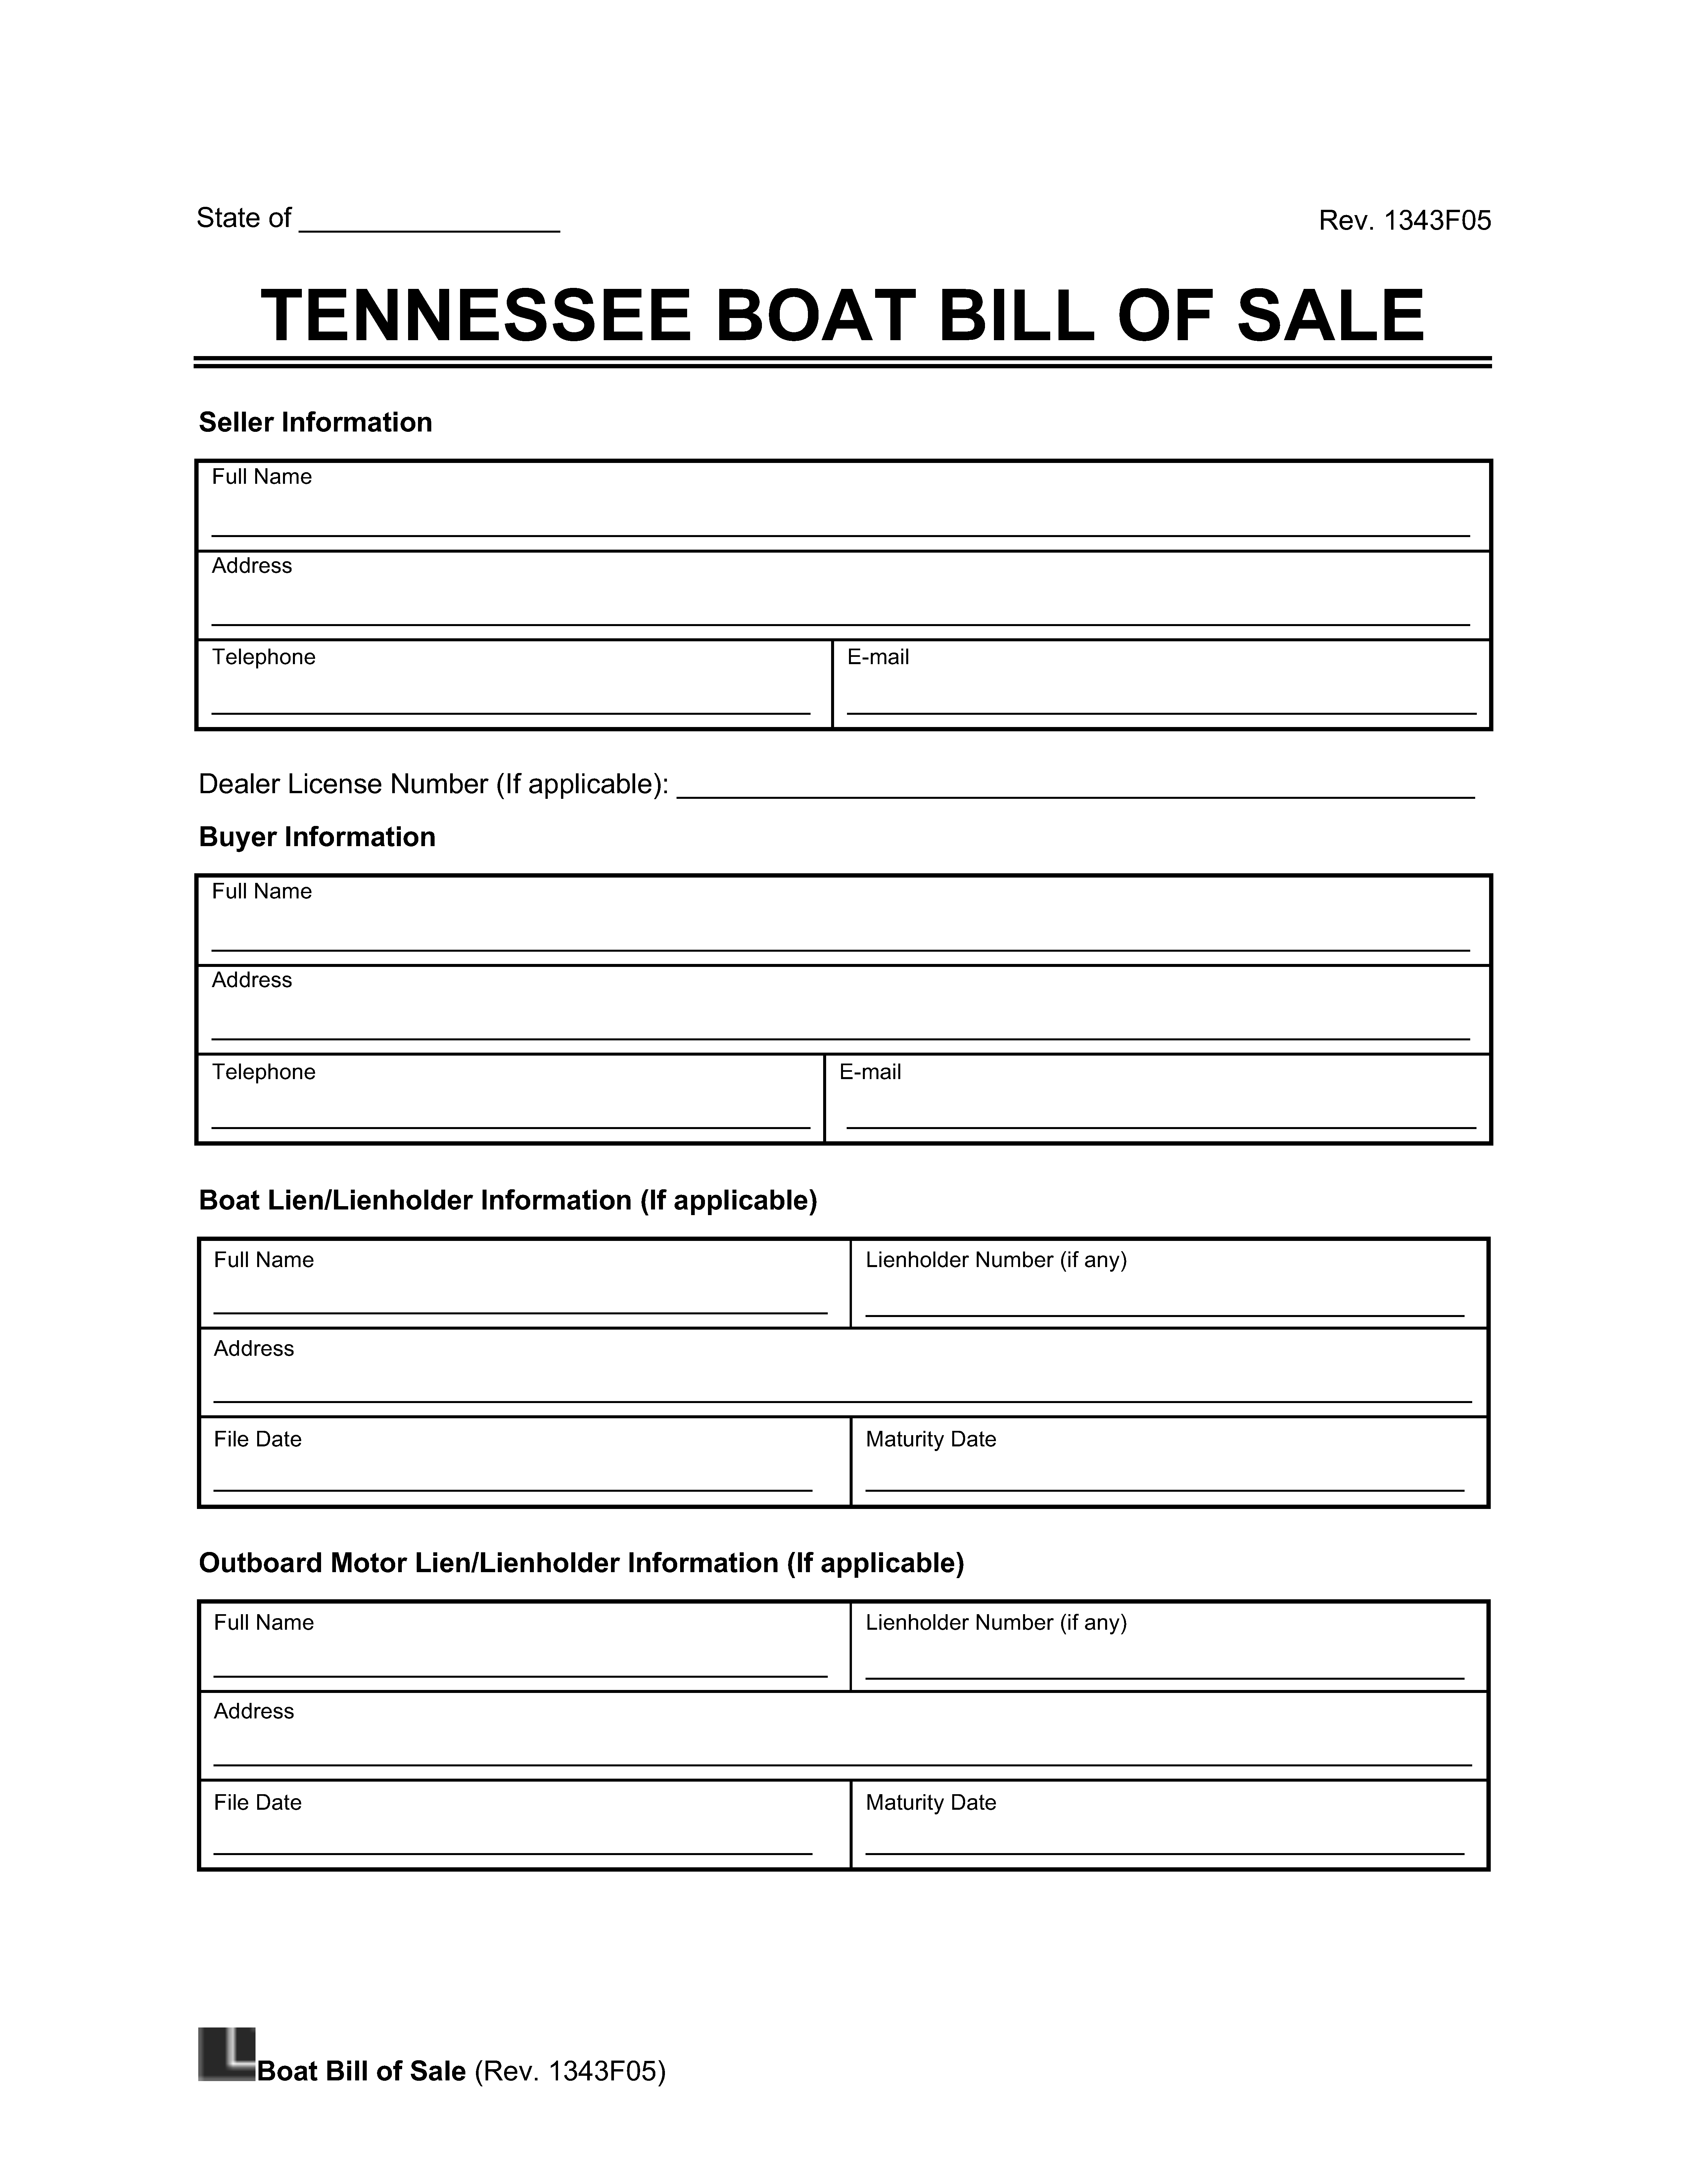 Tennessee Boat Bill of Sale screenshot